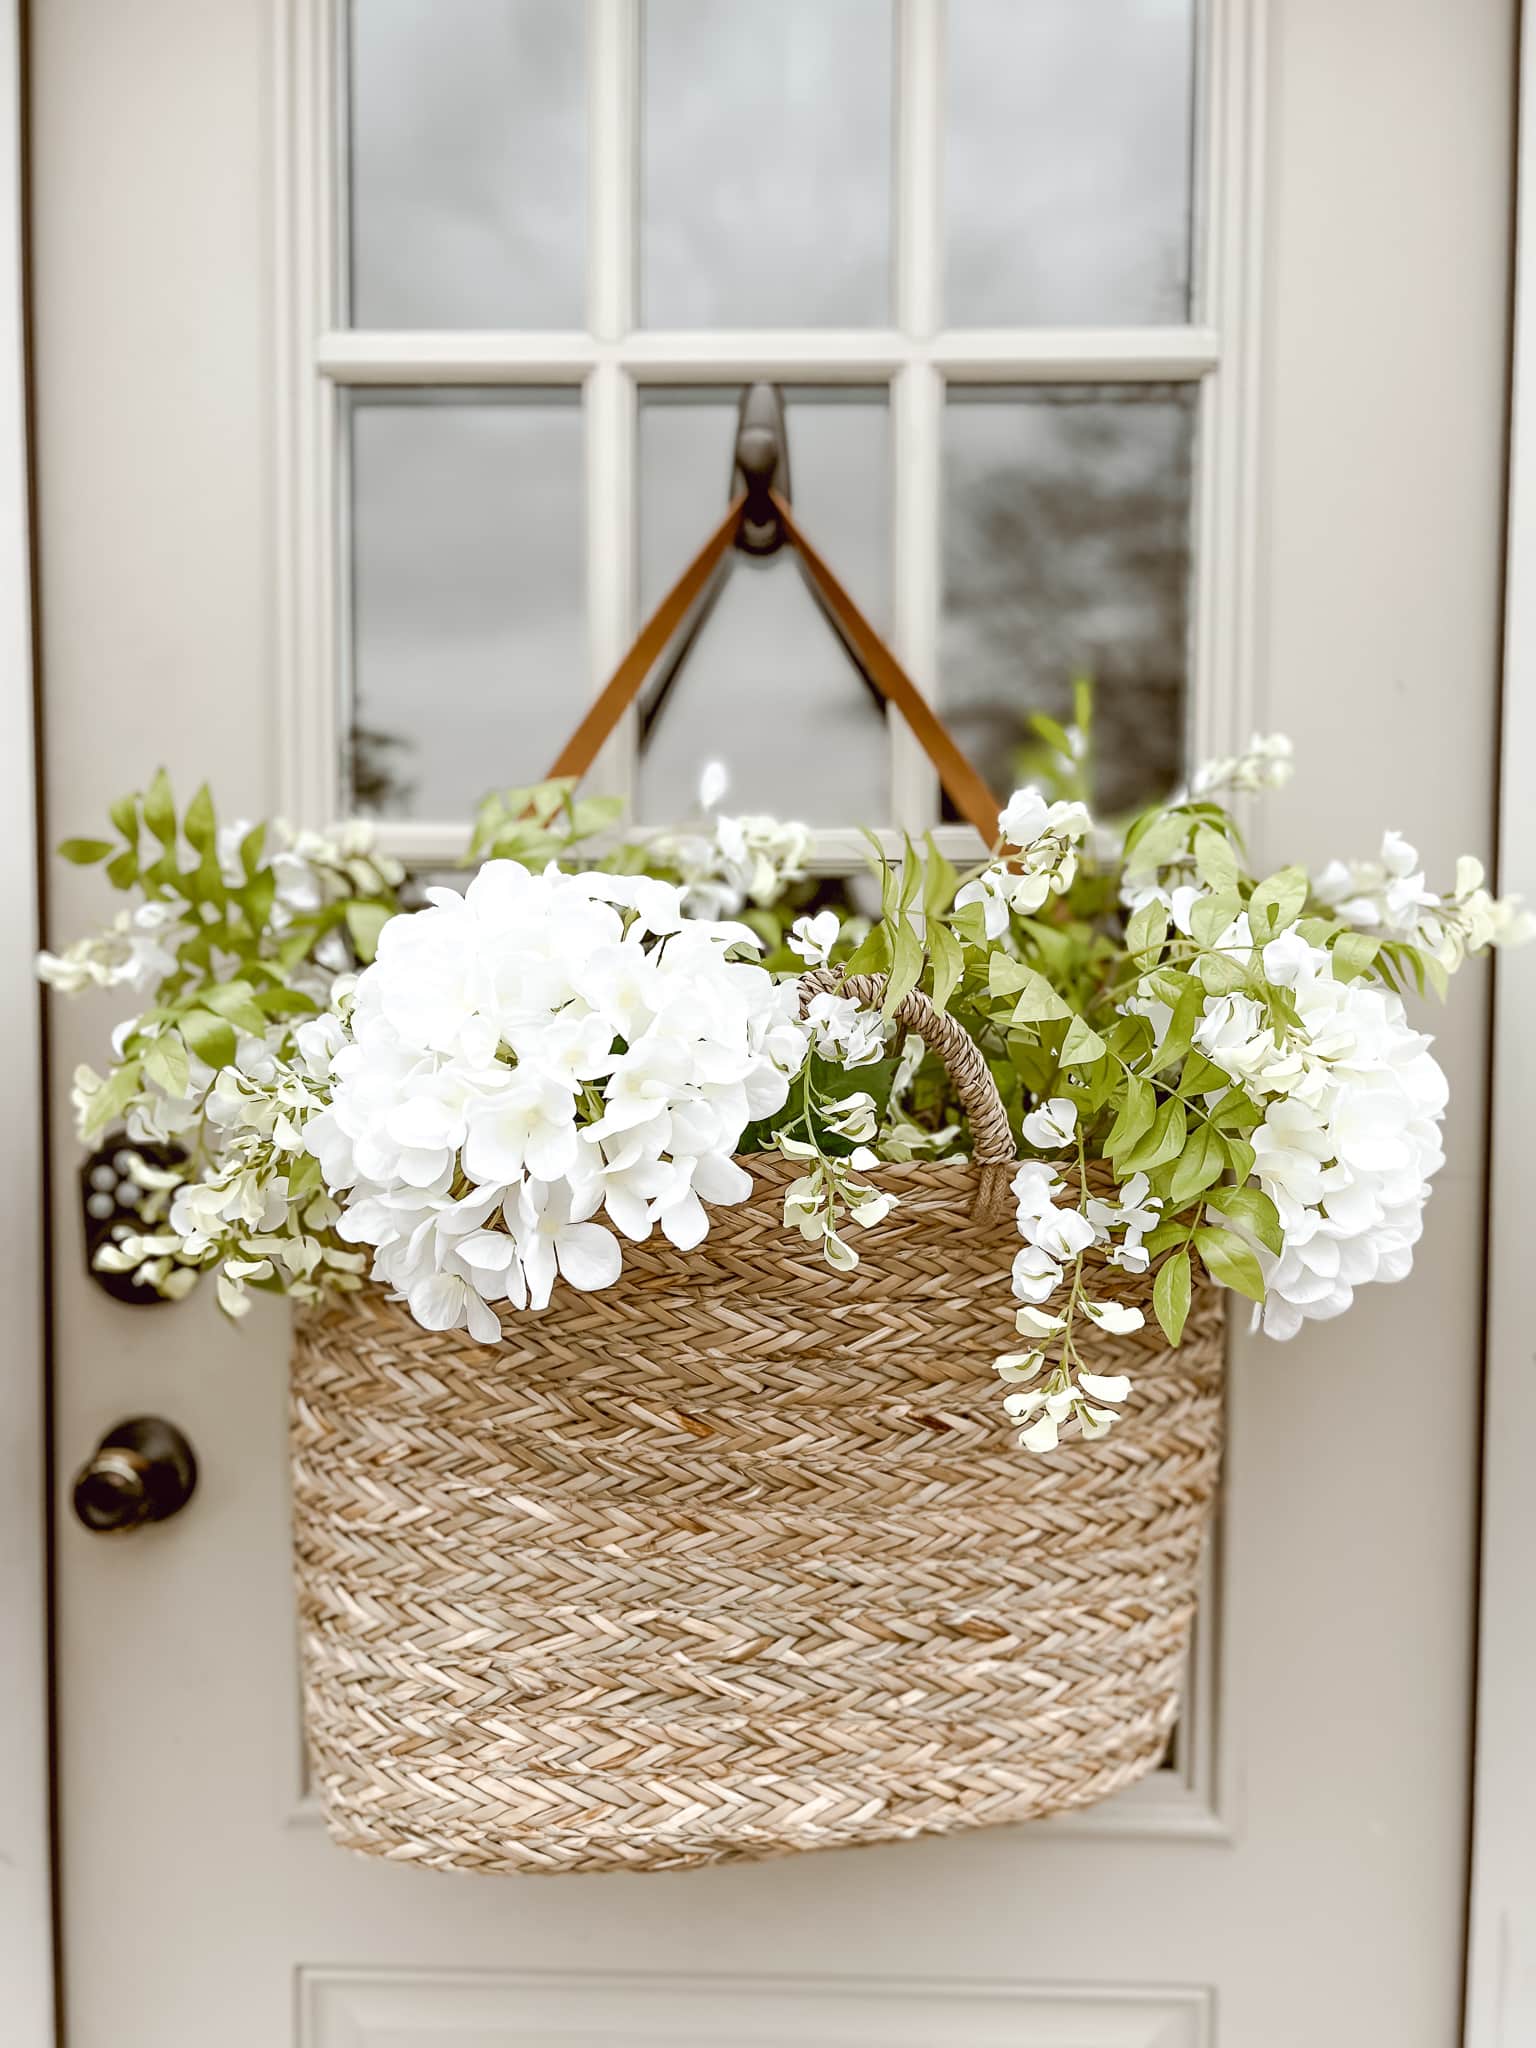 citrus themed basket as a wreath idea in front door